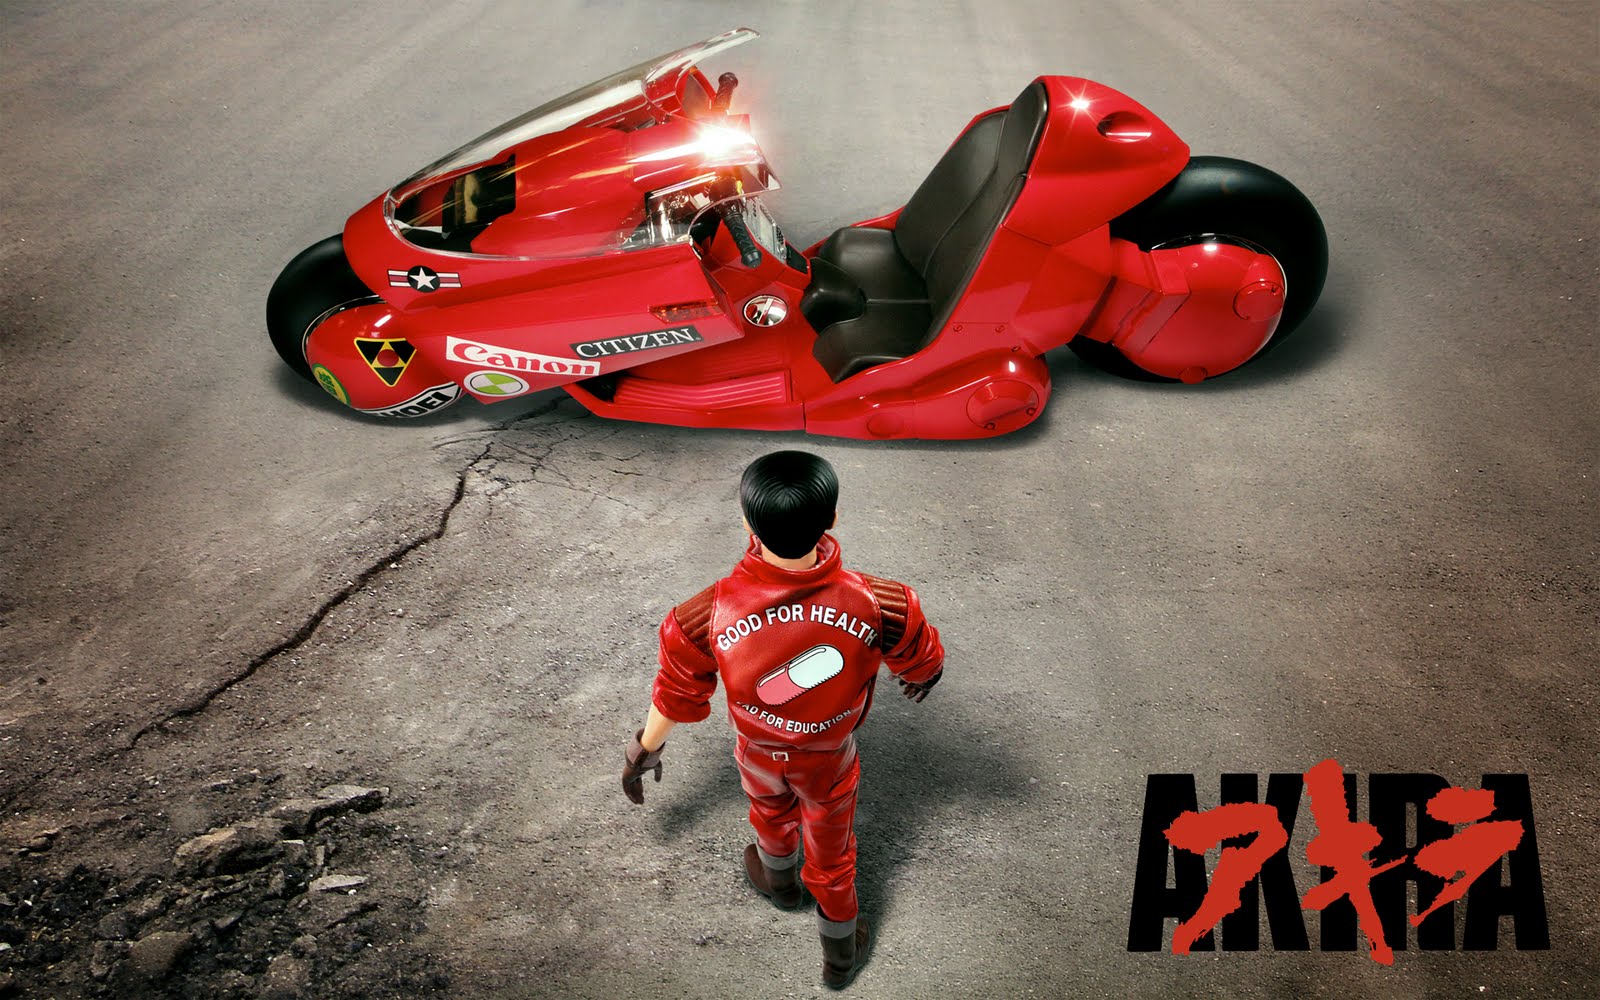 akira wallpaper hd,motorcycle racer,red,vehicle,motorsport,car